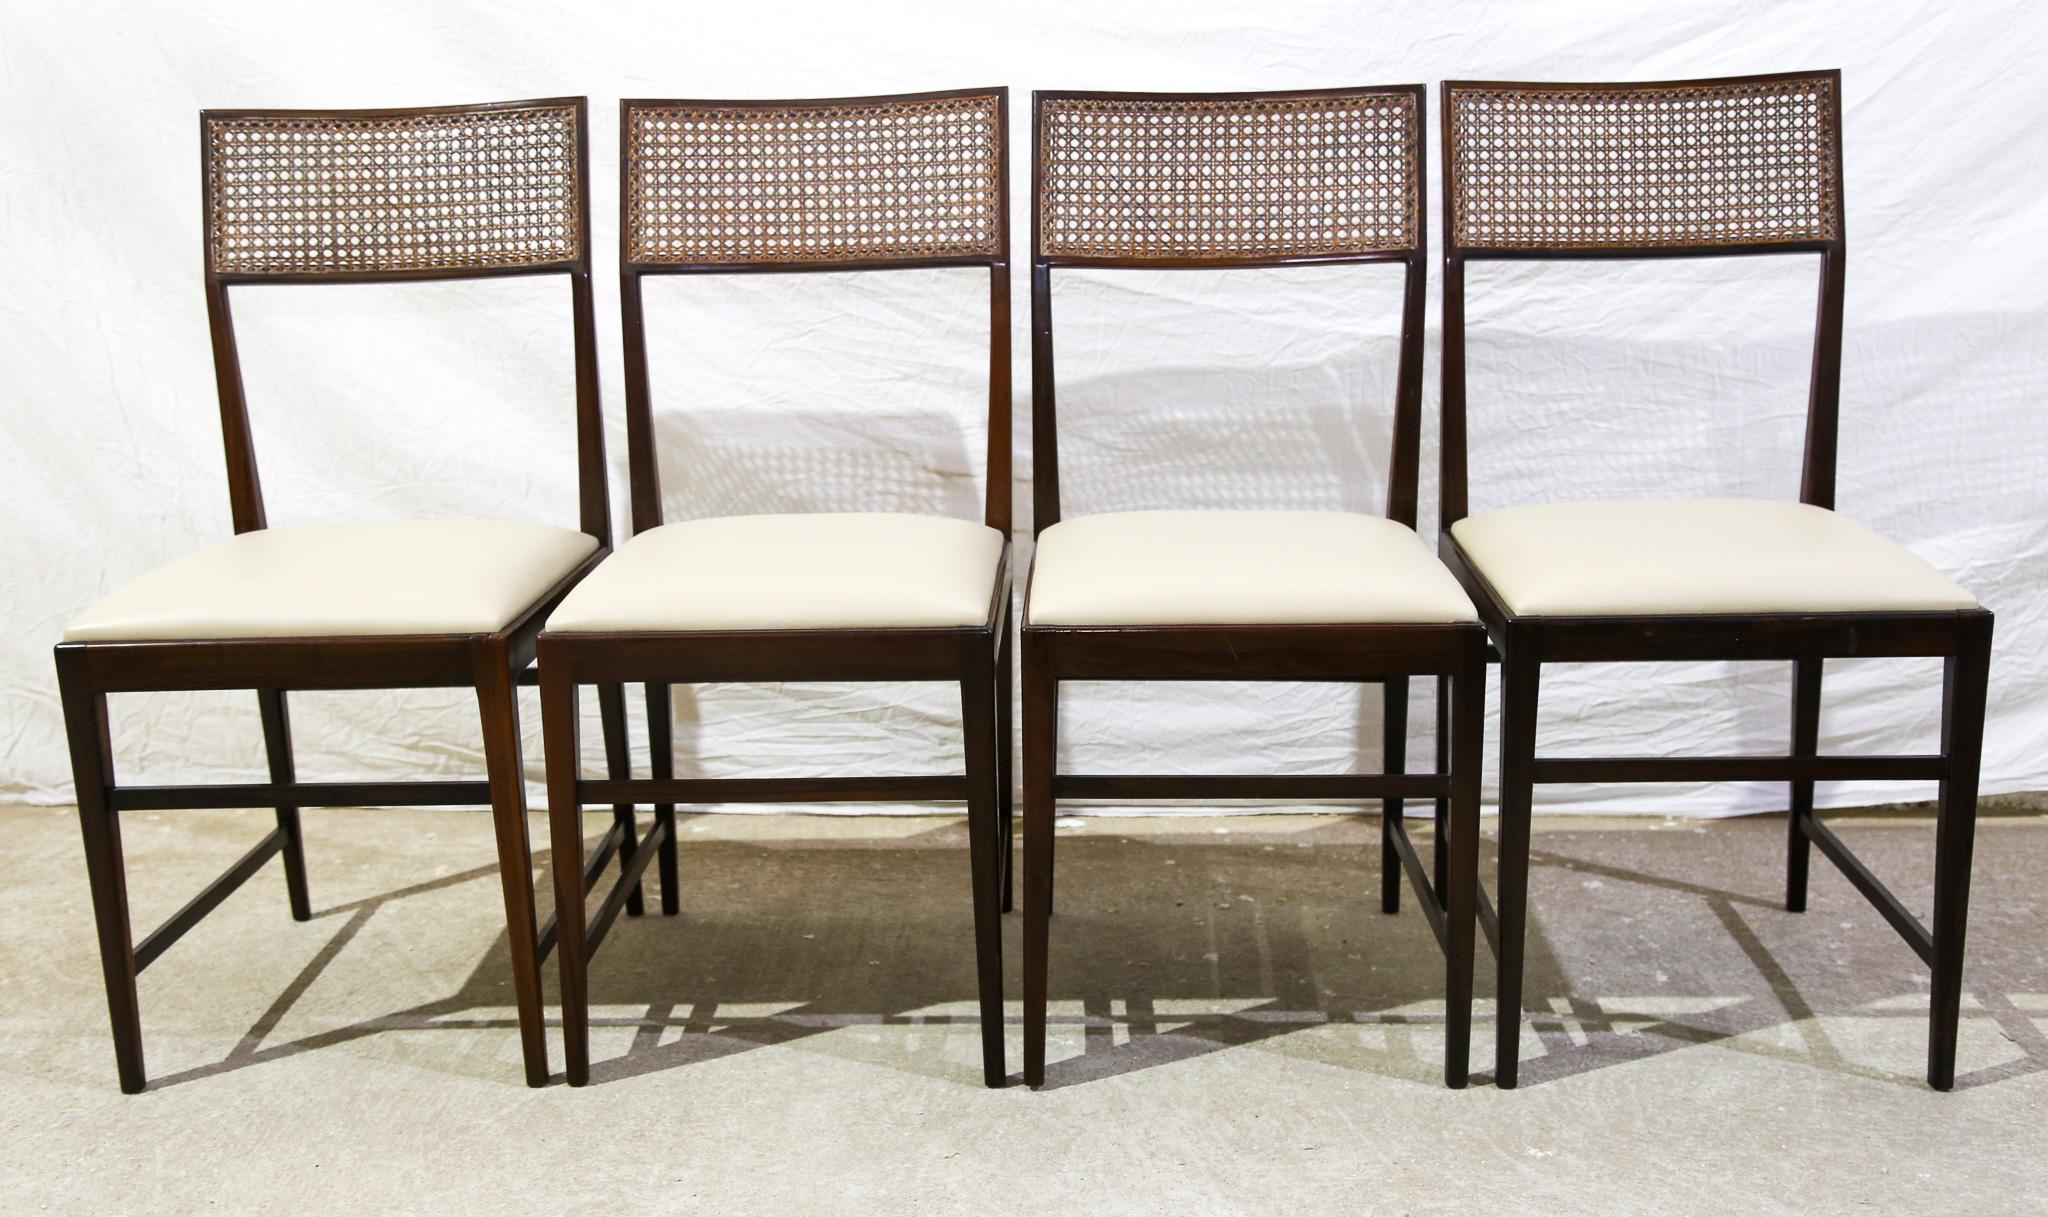 Brazilian Modern 4 Chair Set in Hardwood, Cane, Leather, Joaquim Tenreiro 1950s For Sale 3